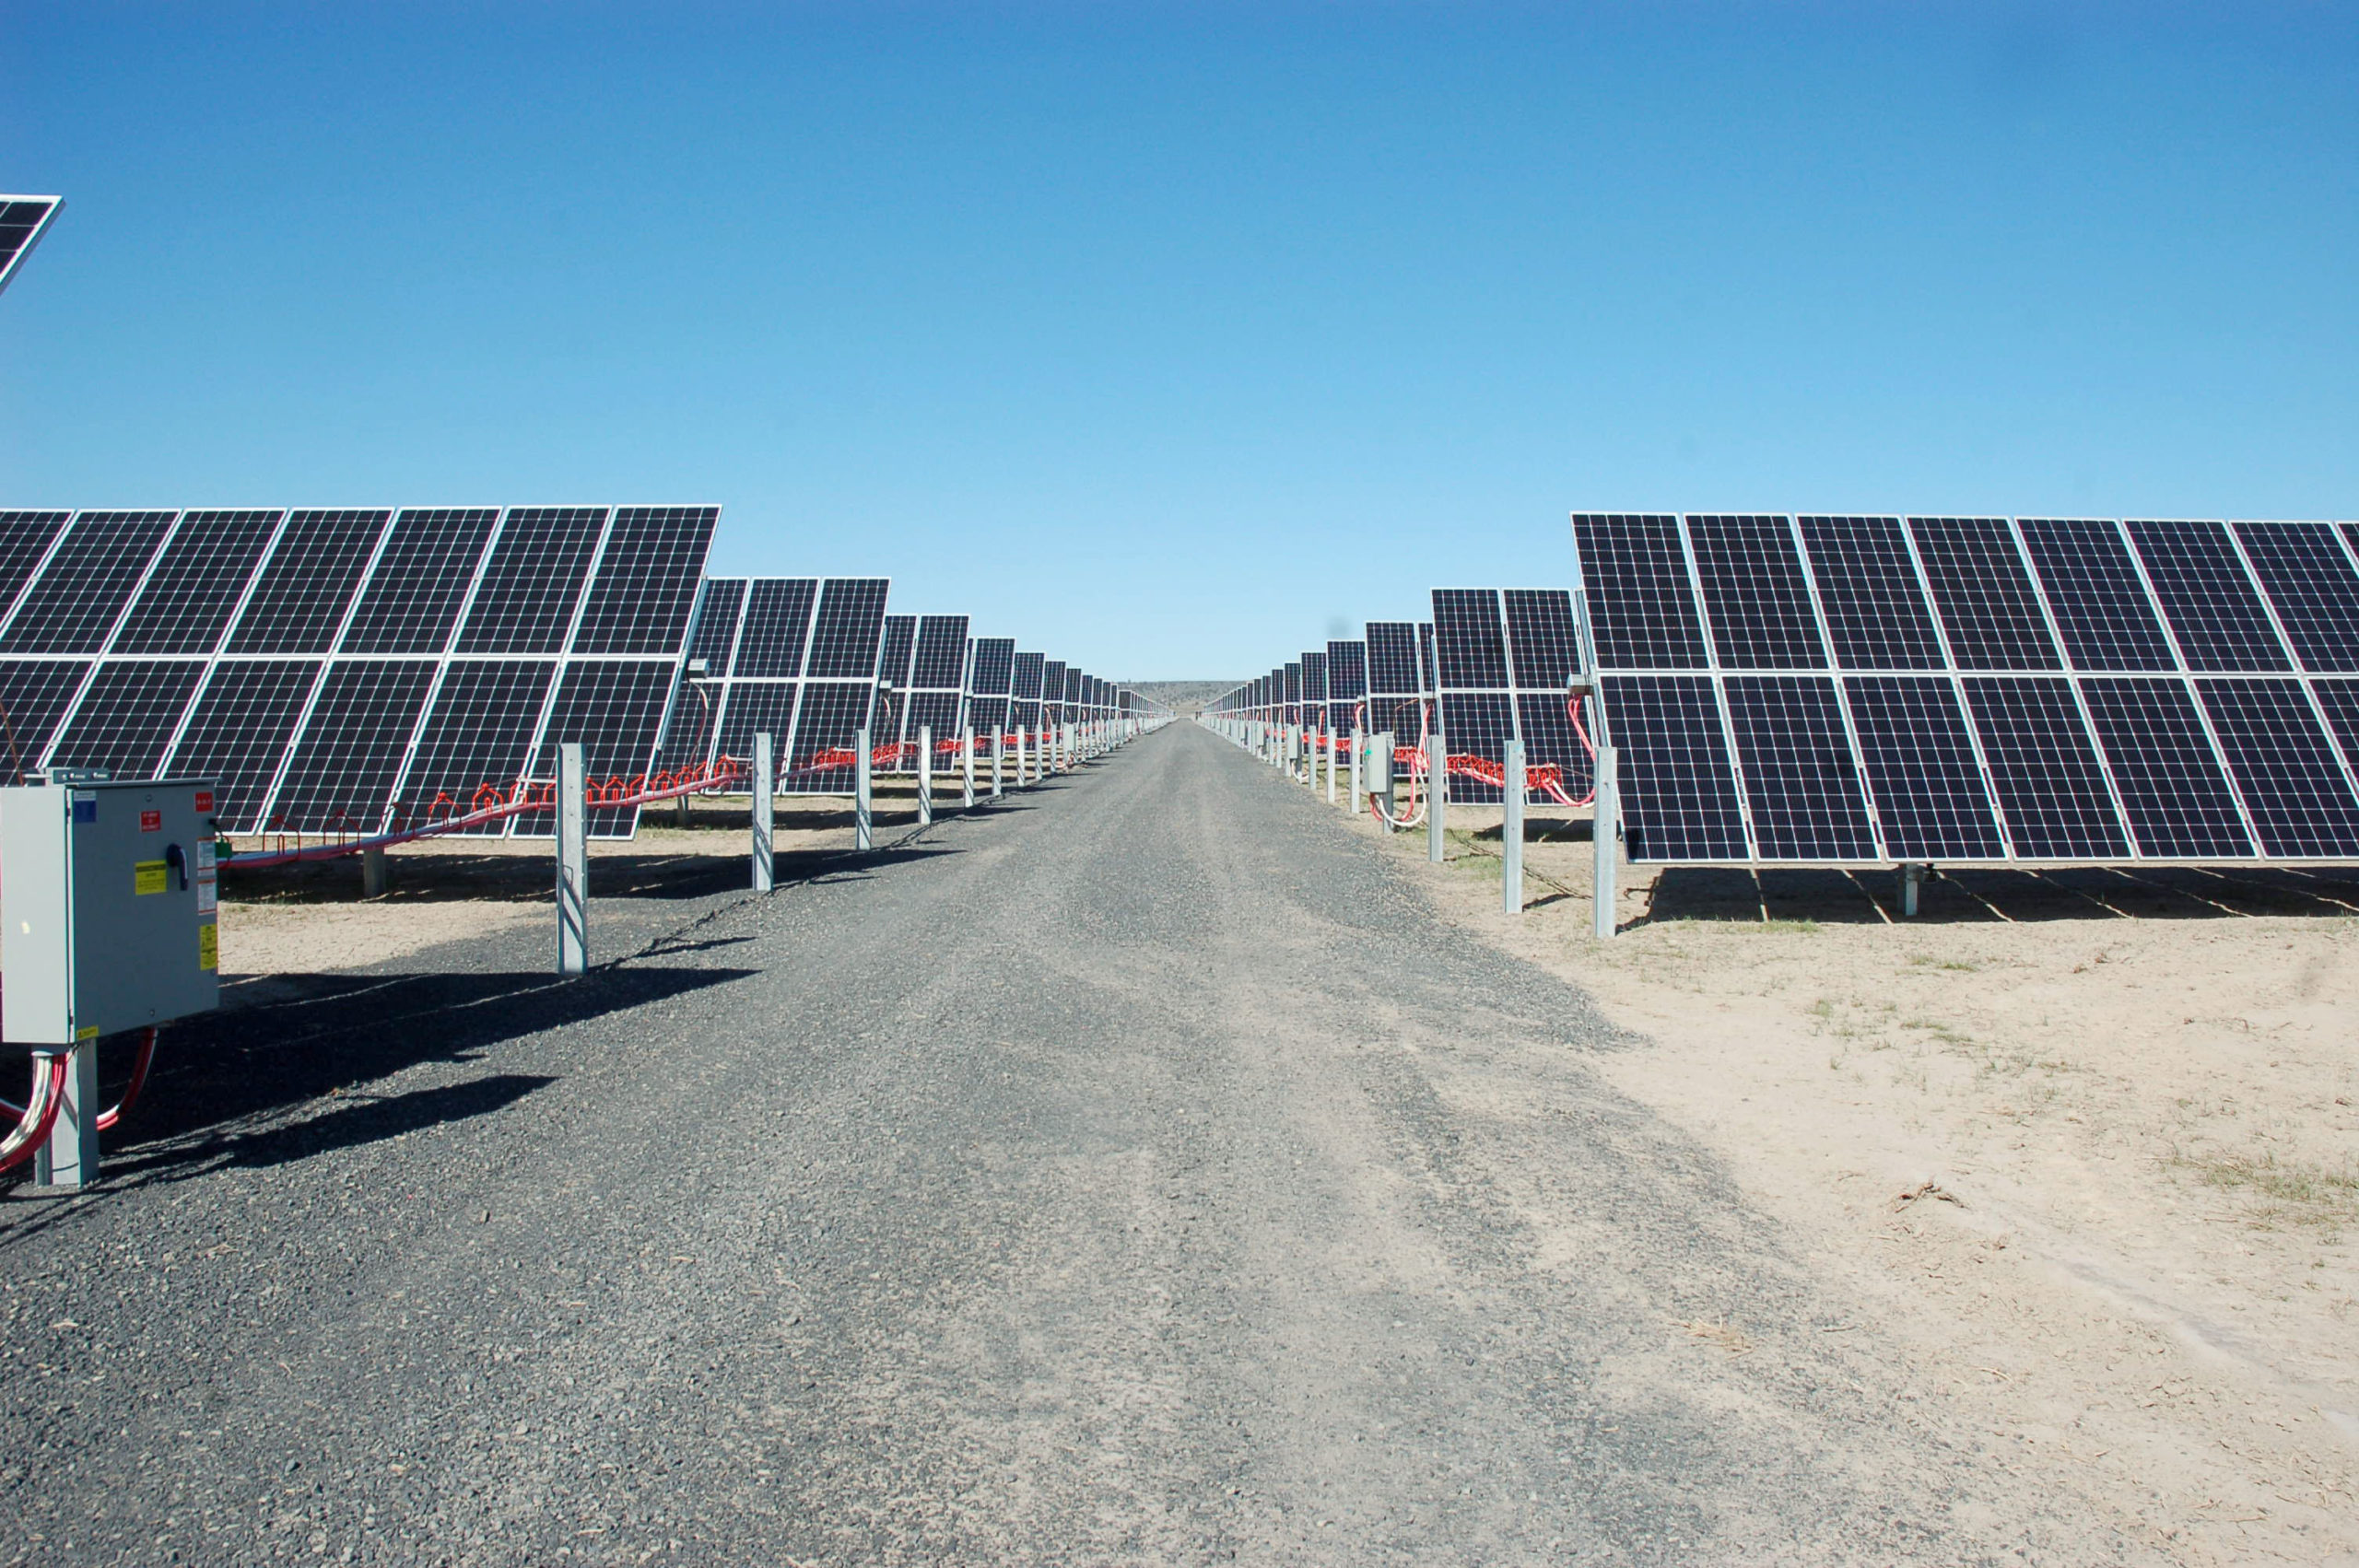 newsun-energy-provides-pge-with-power-via-solar-farms-burns-times-herald